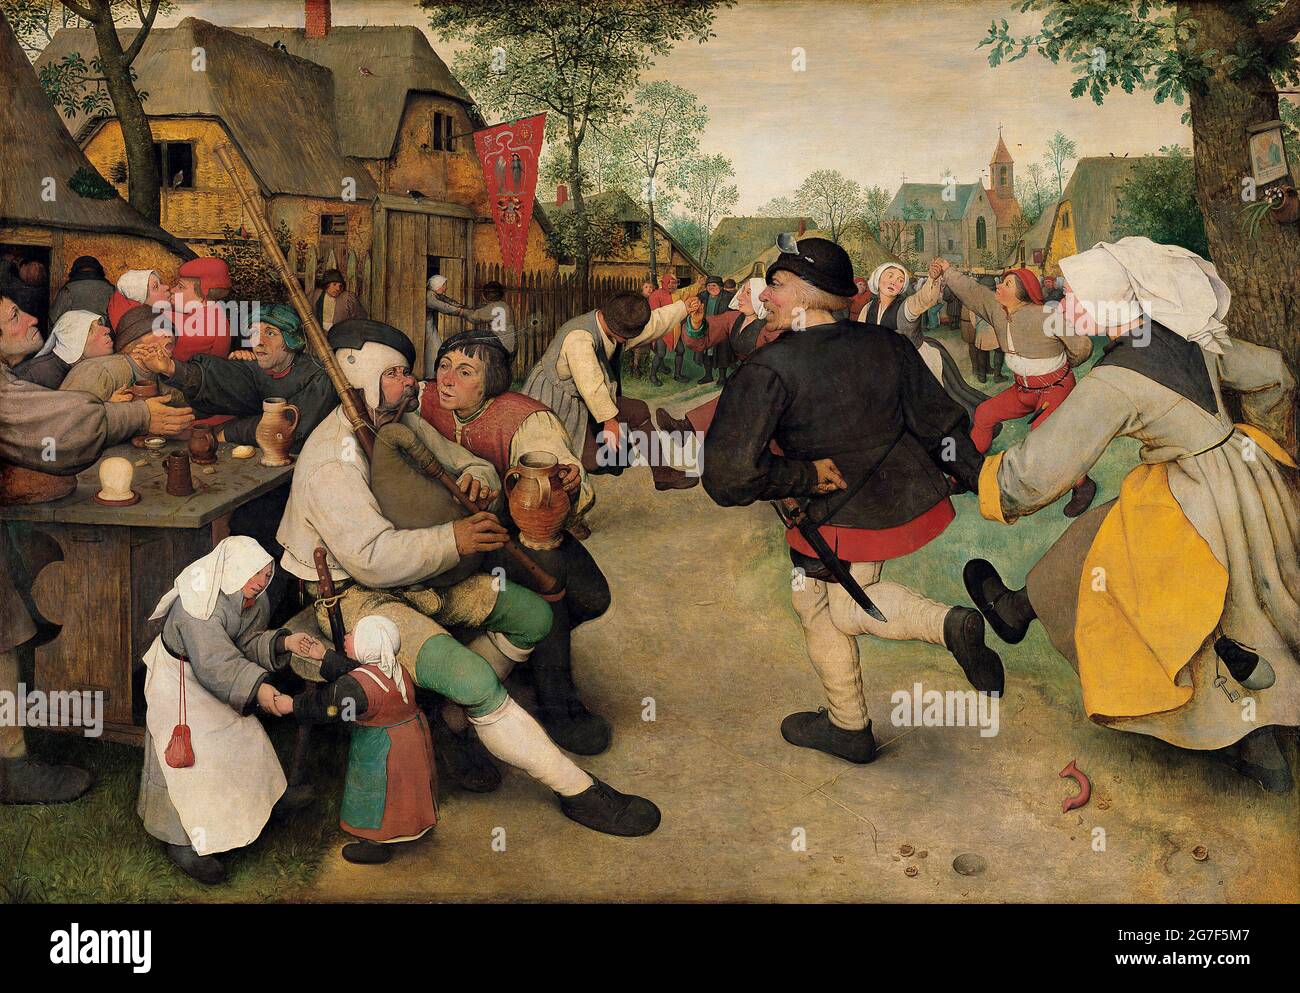 La danza campesina de Pieter Brueghel el Viejo Foto de stock